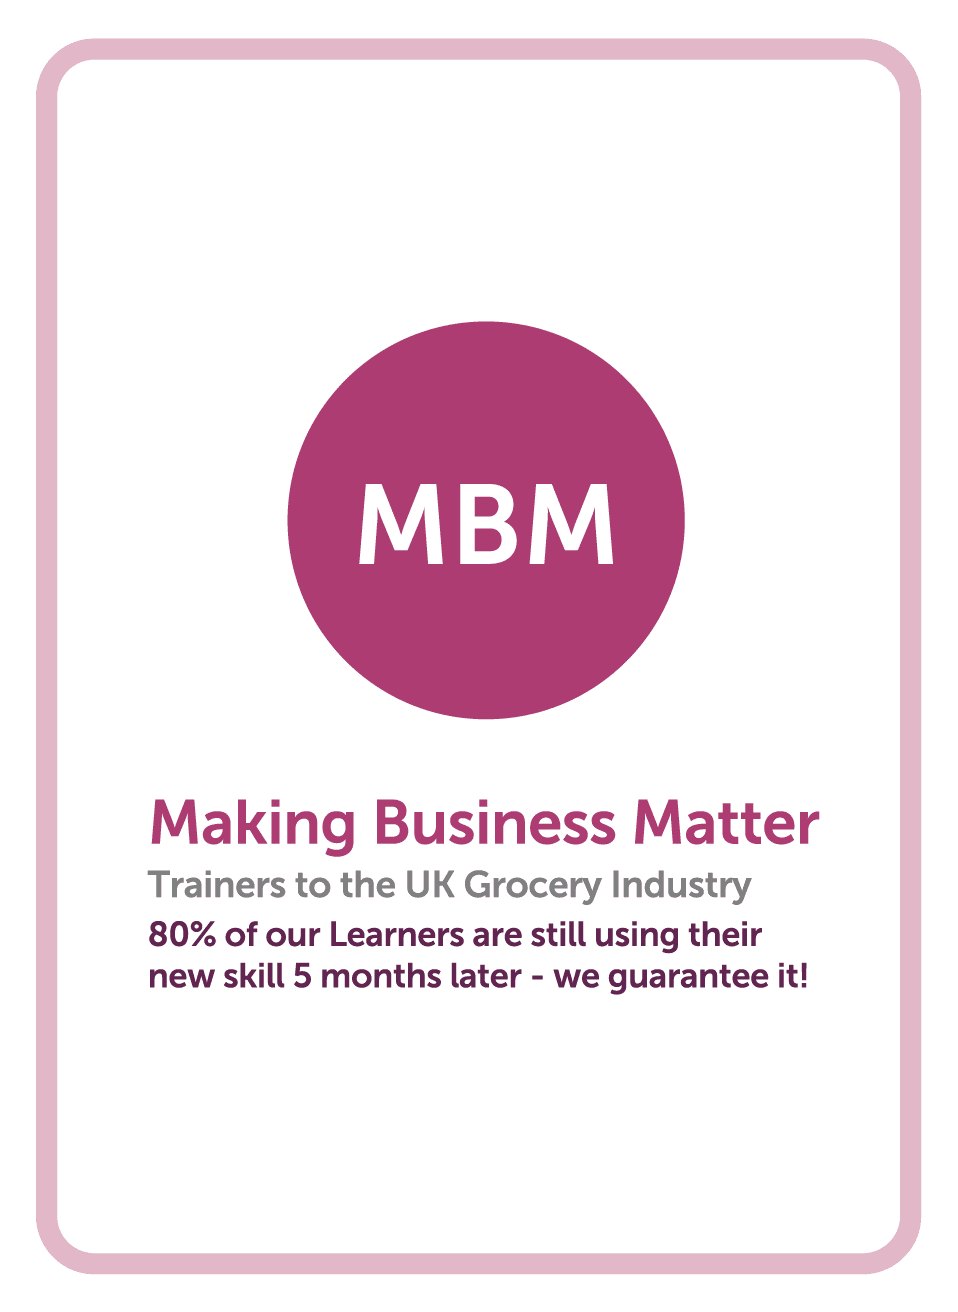 GROW coaching card with MBM logo